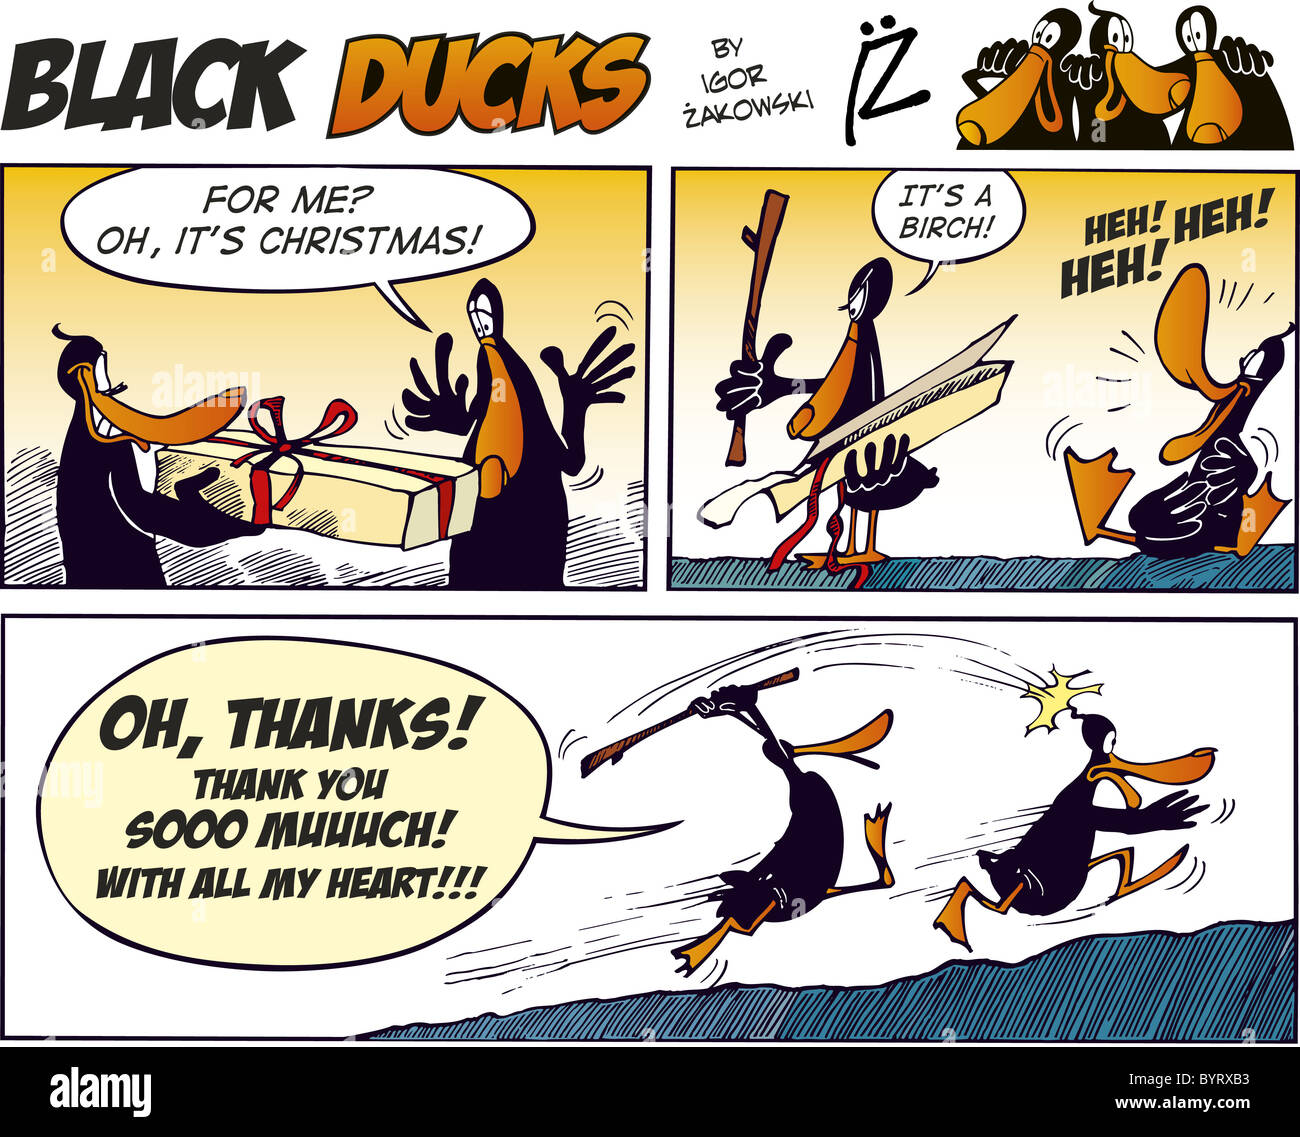 Black Ducks Comic Strip episode 27 Stock Photo